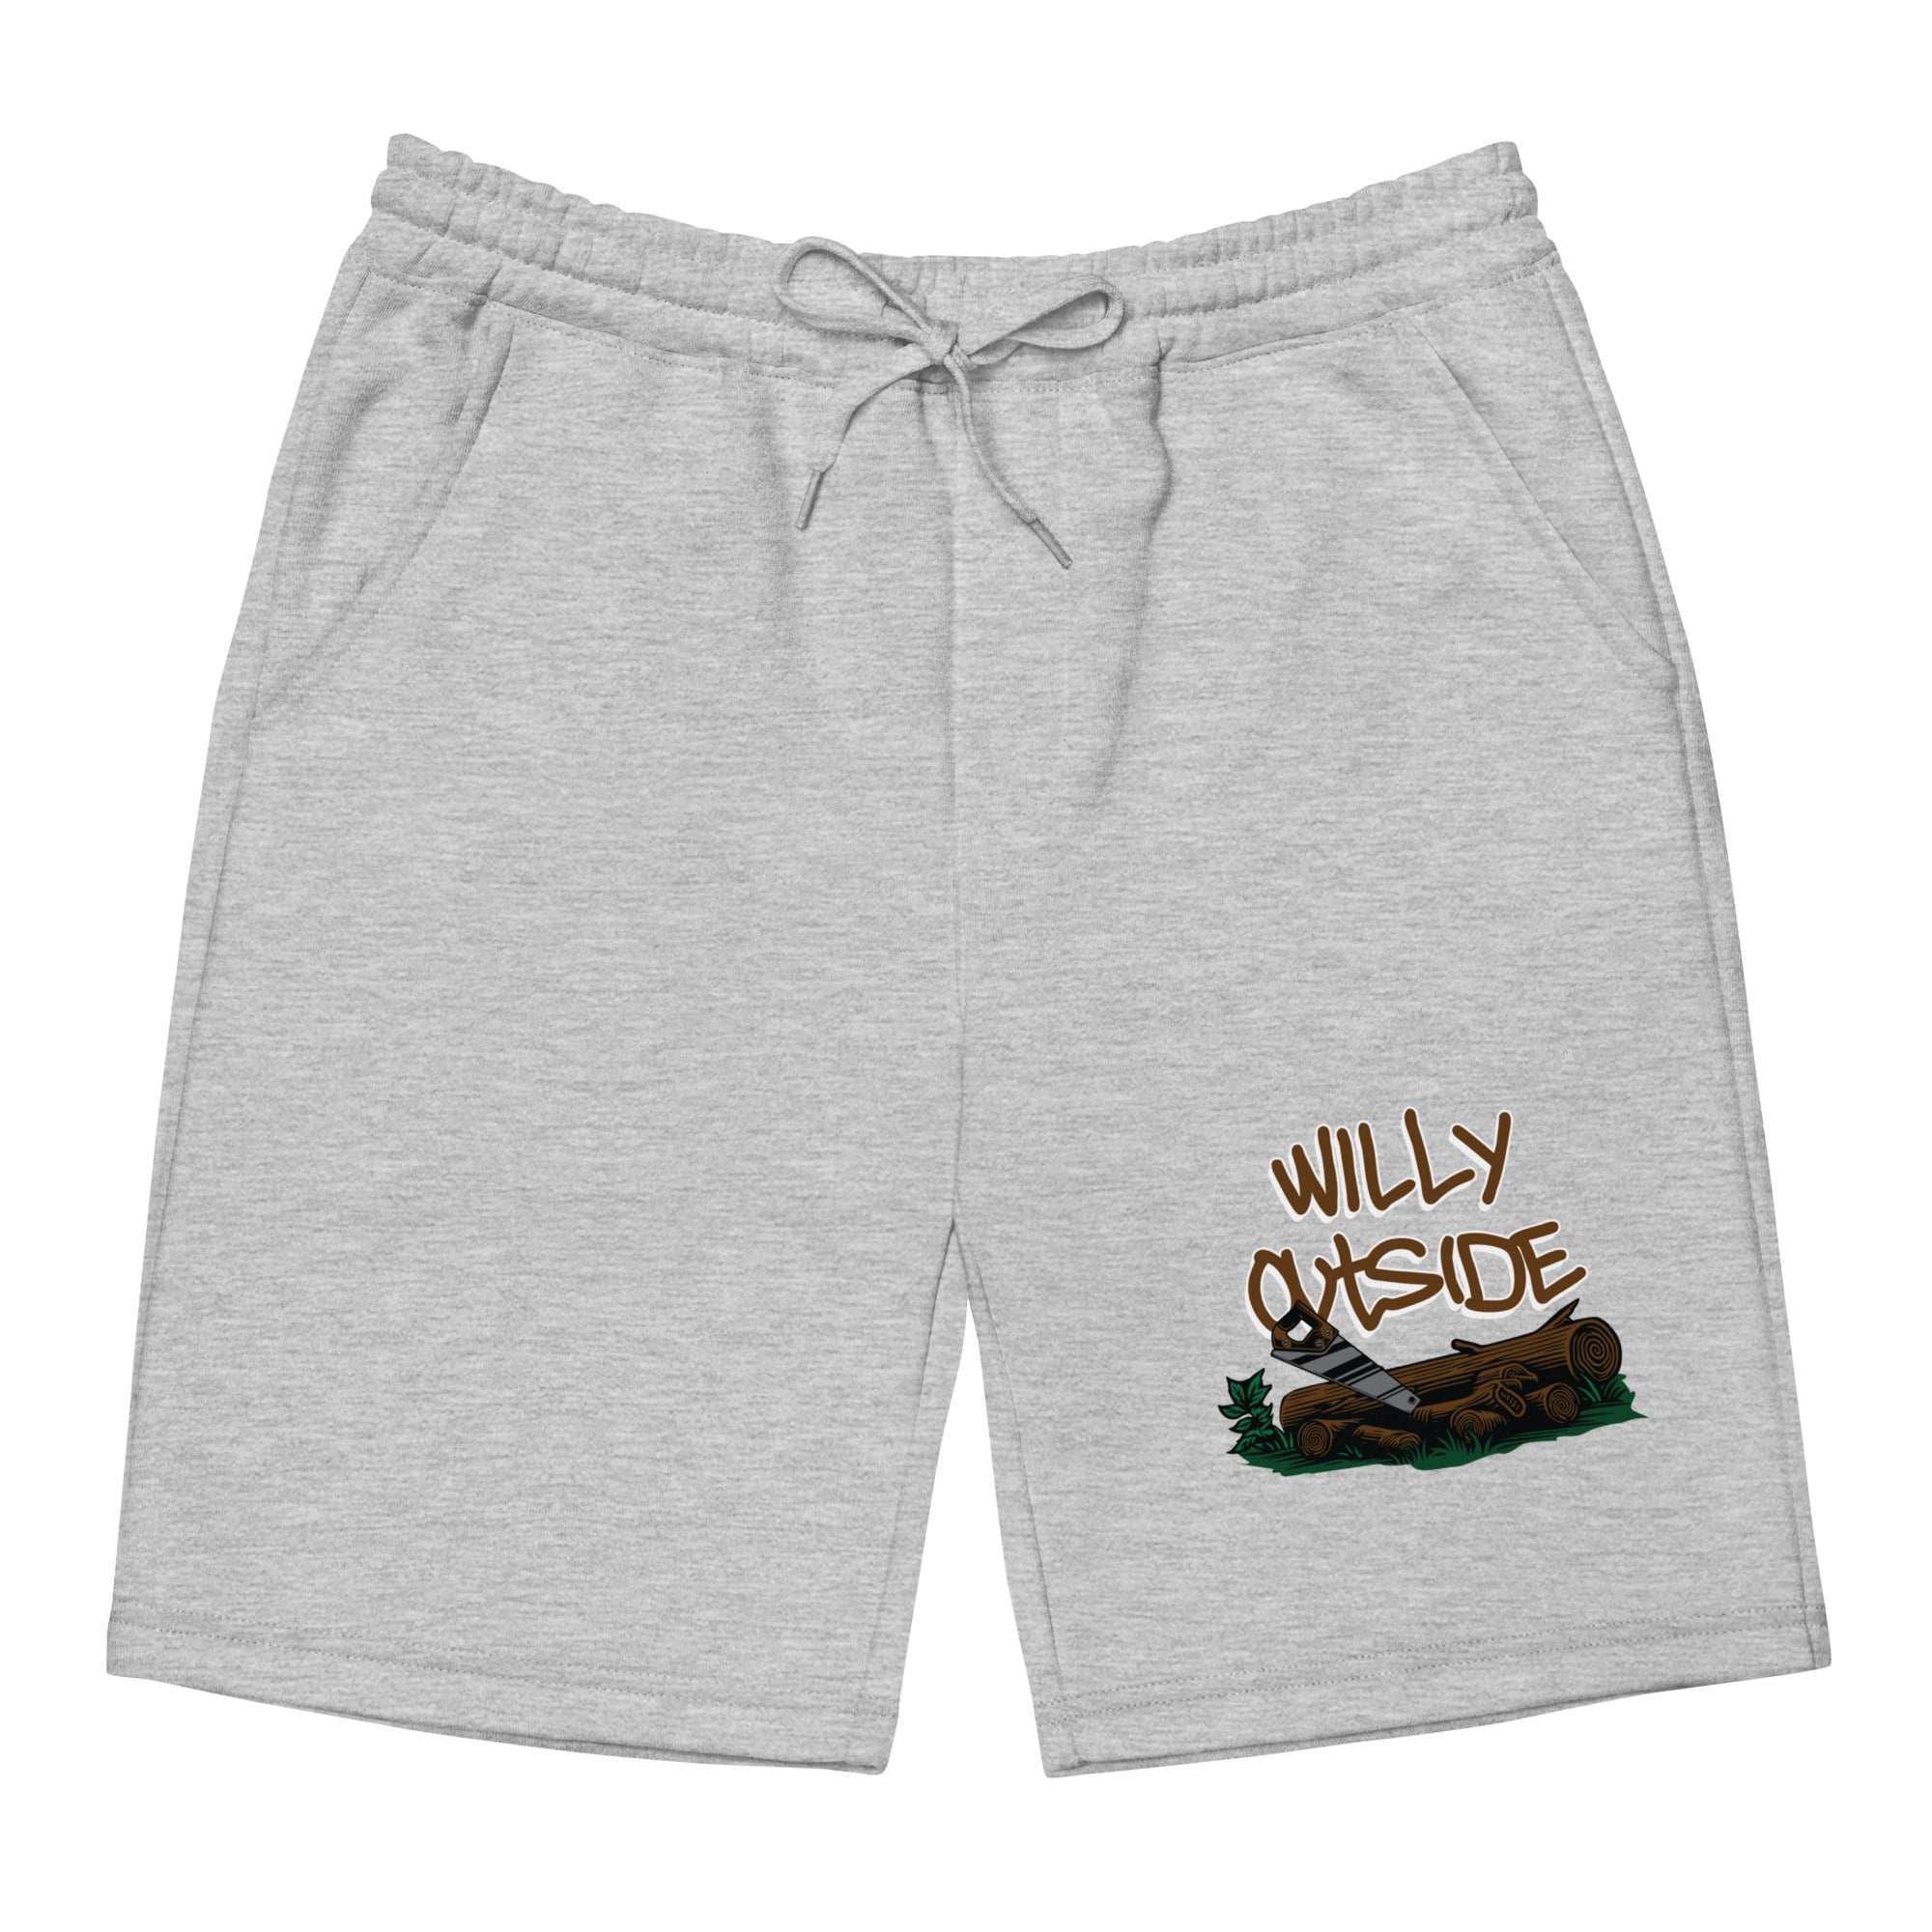 "Willy Outside" fleece shorts